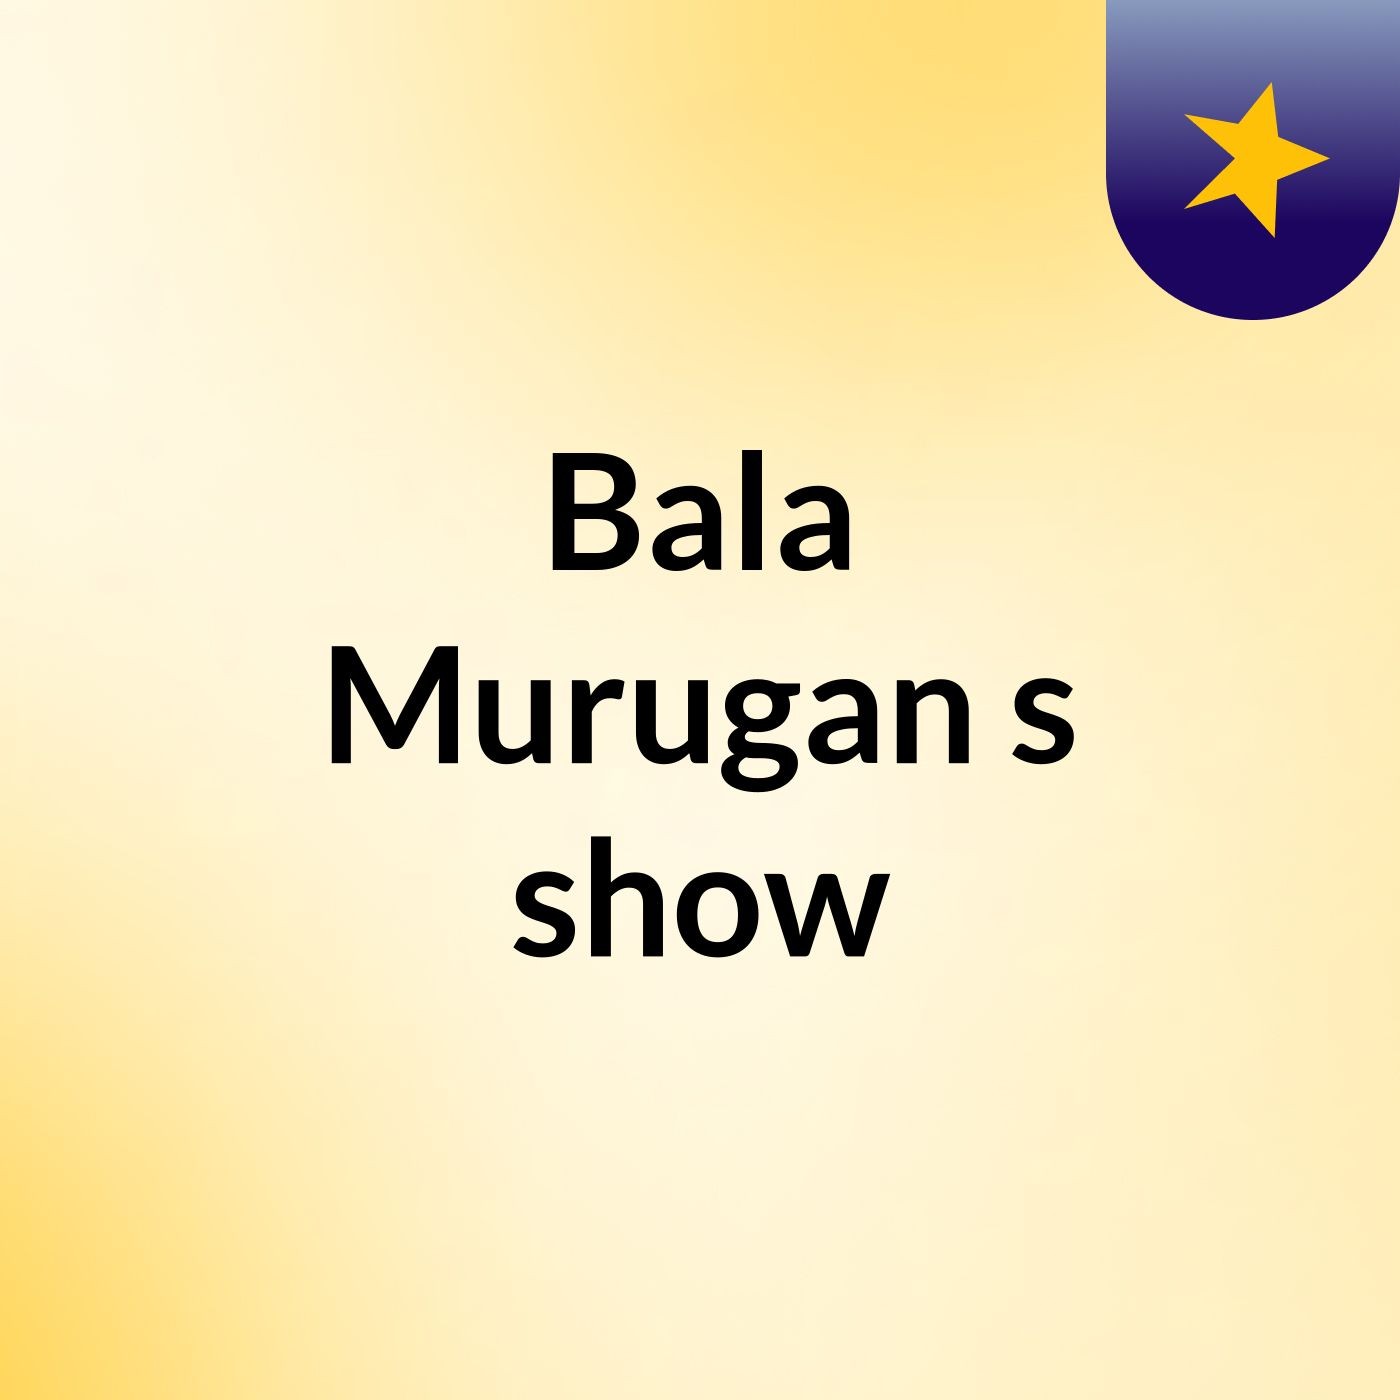 Bala Murugan's show